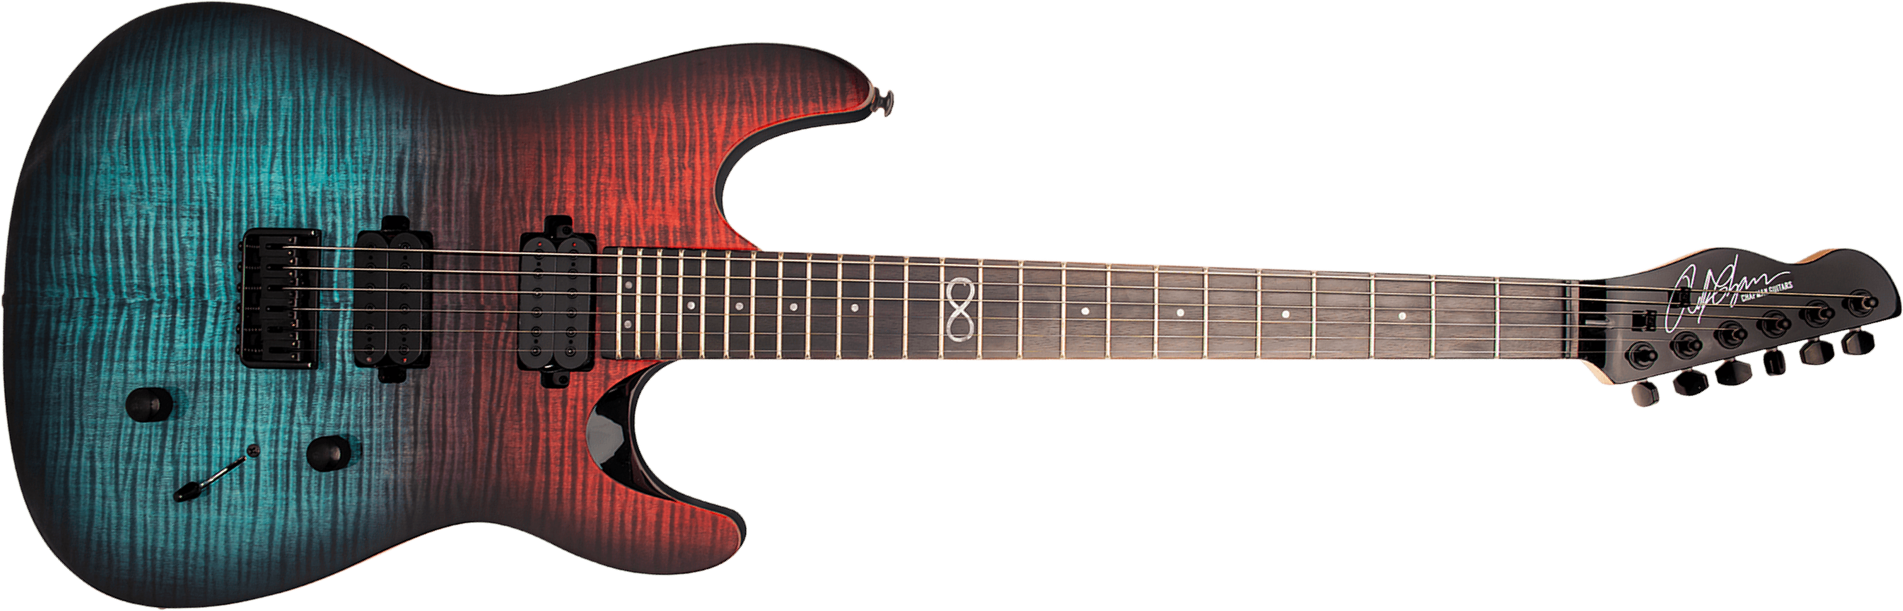 Chapman Guitars Ml1 Modern Standard V2 Hh Ht Eb - Red Sea - Double cut electric guitar - Main picture